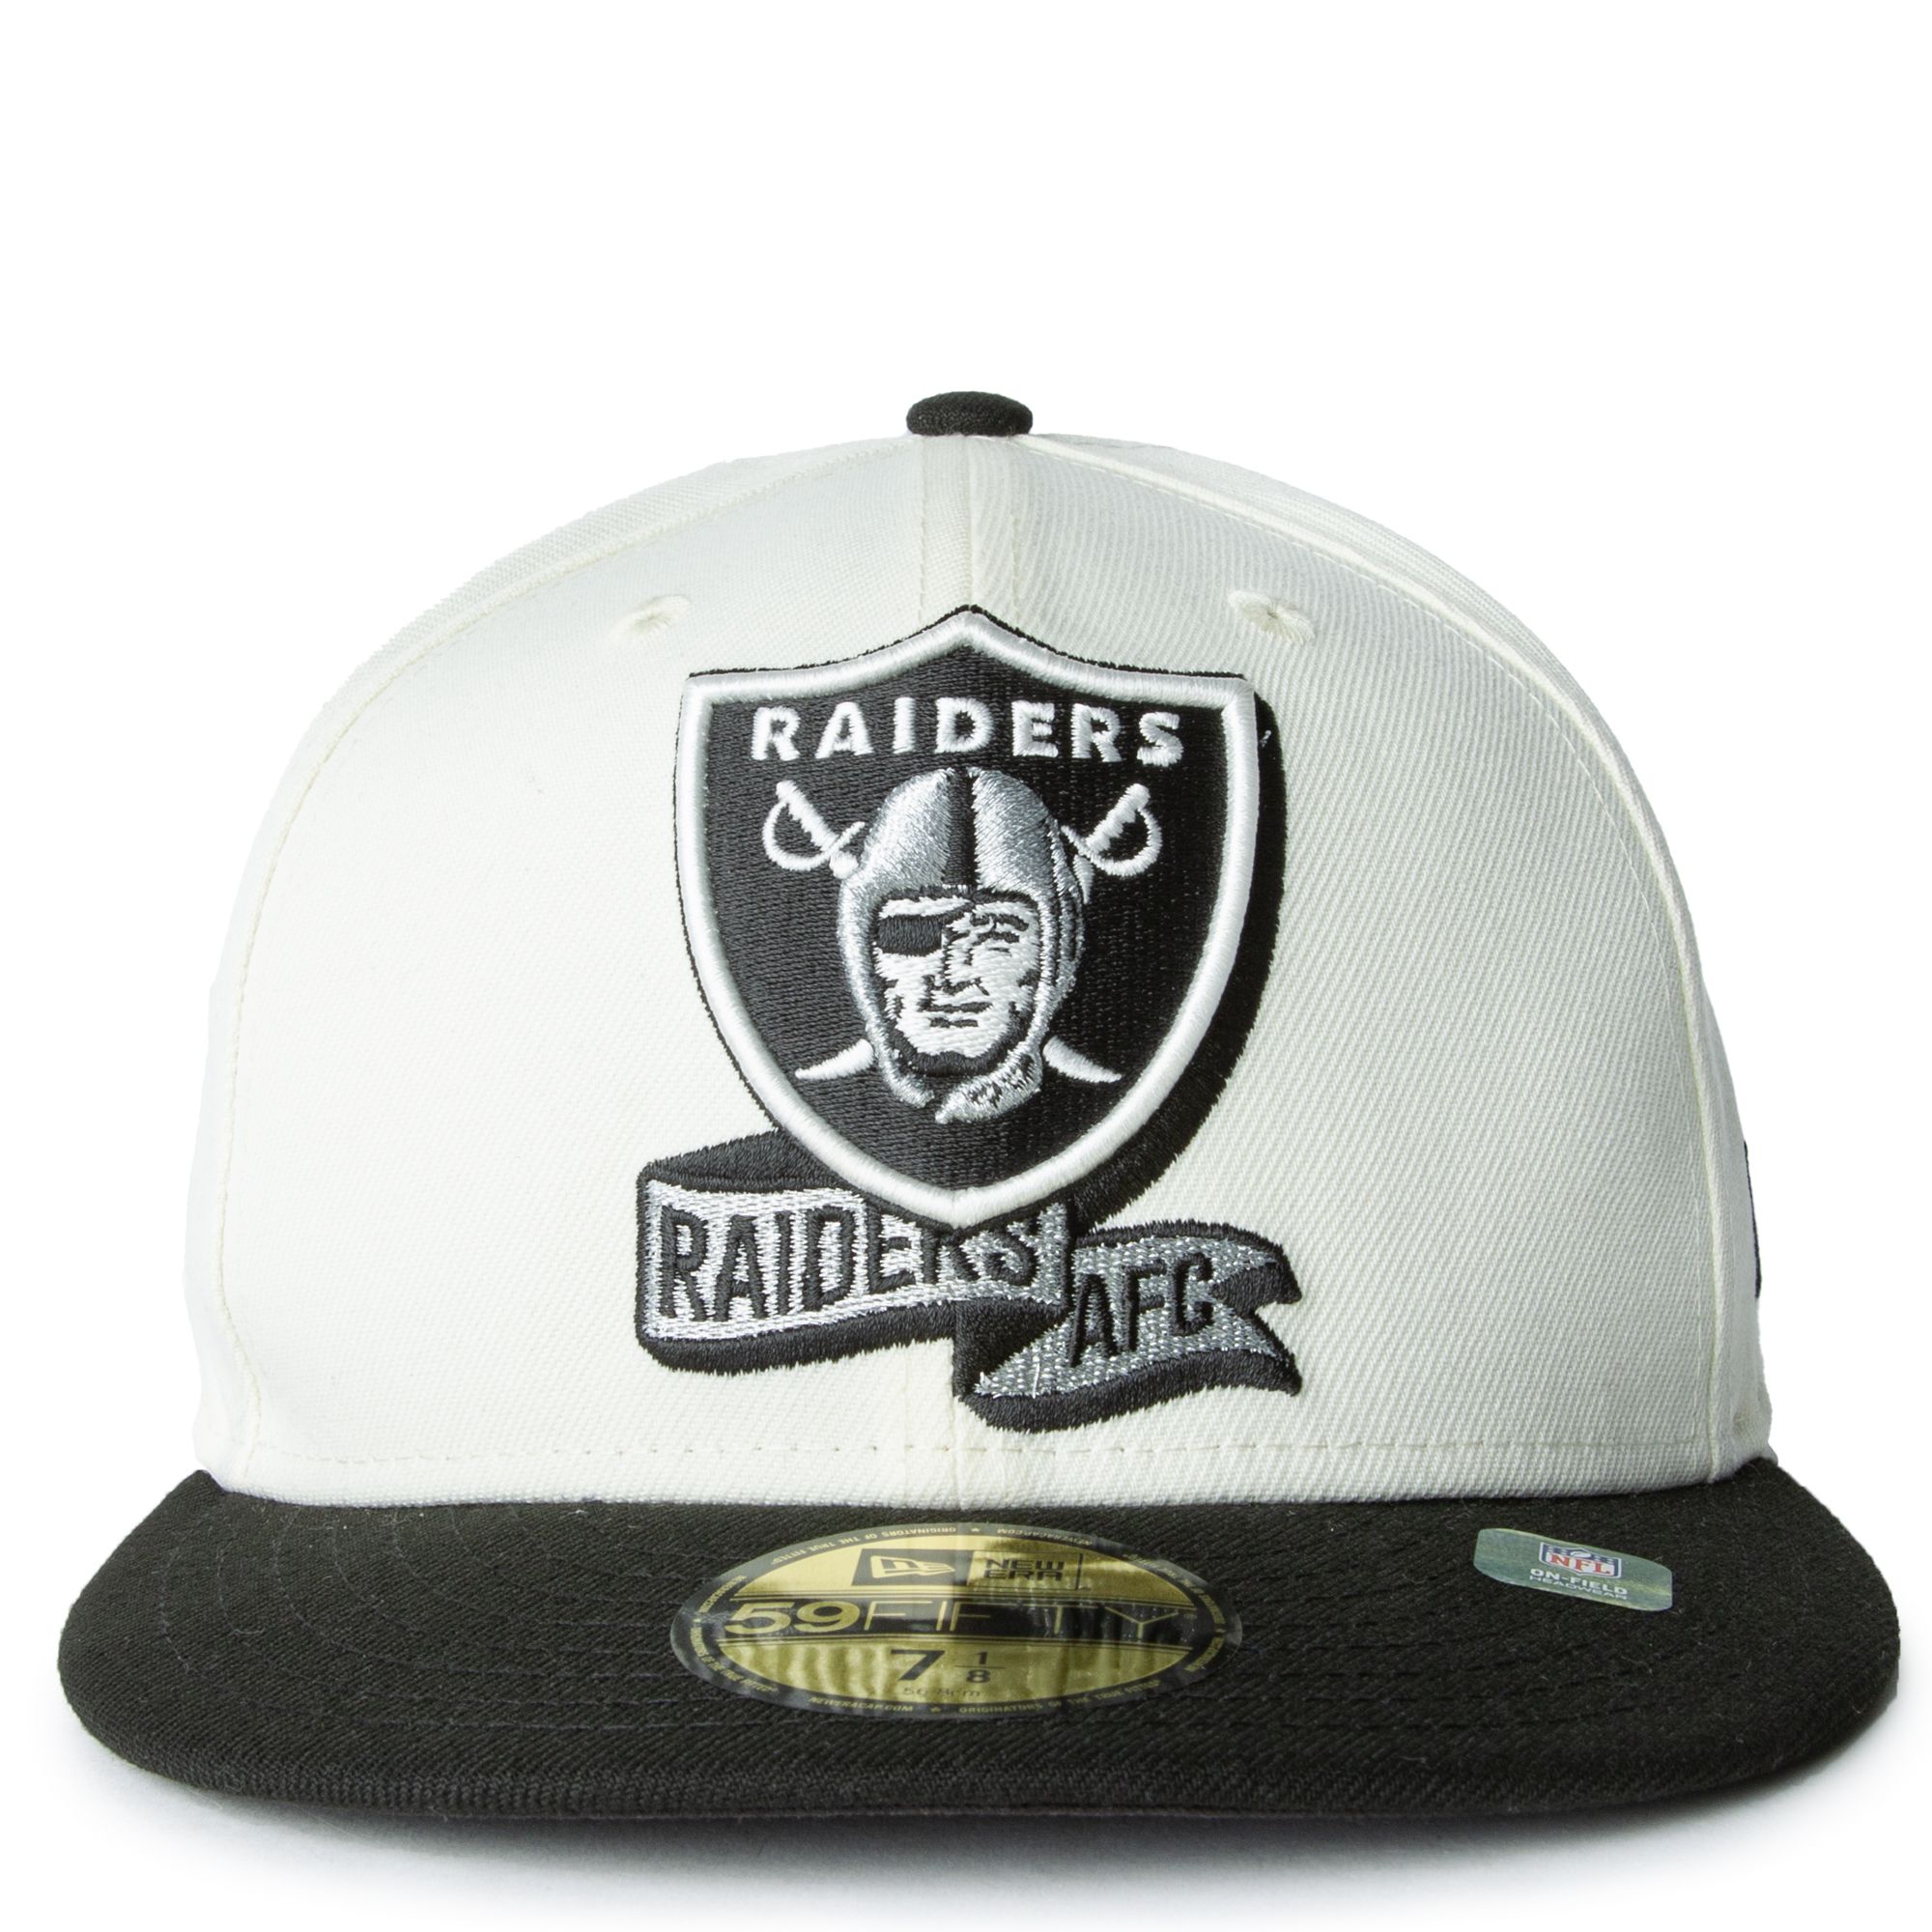 Pro Standard Unisex Las Vegas Raiders Snapback Hat in Black